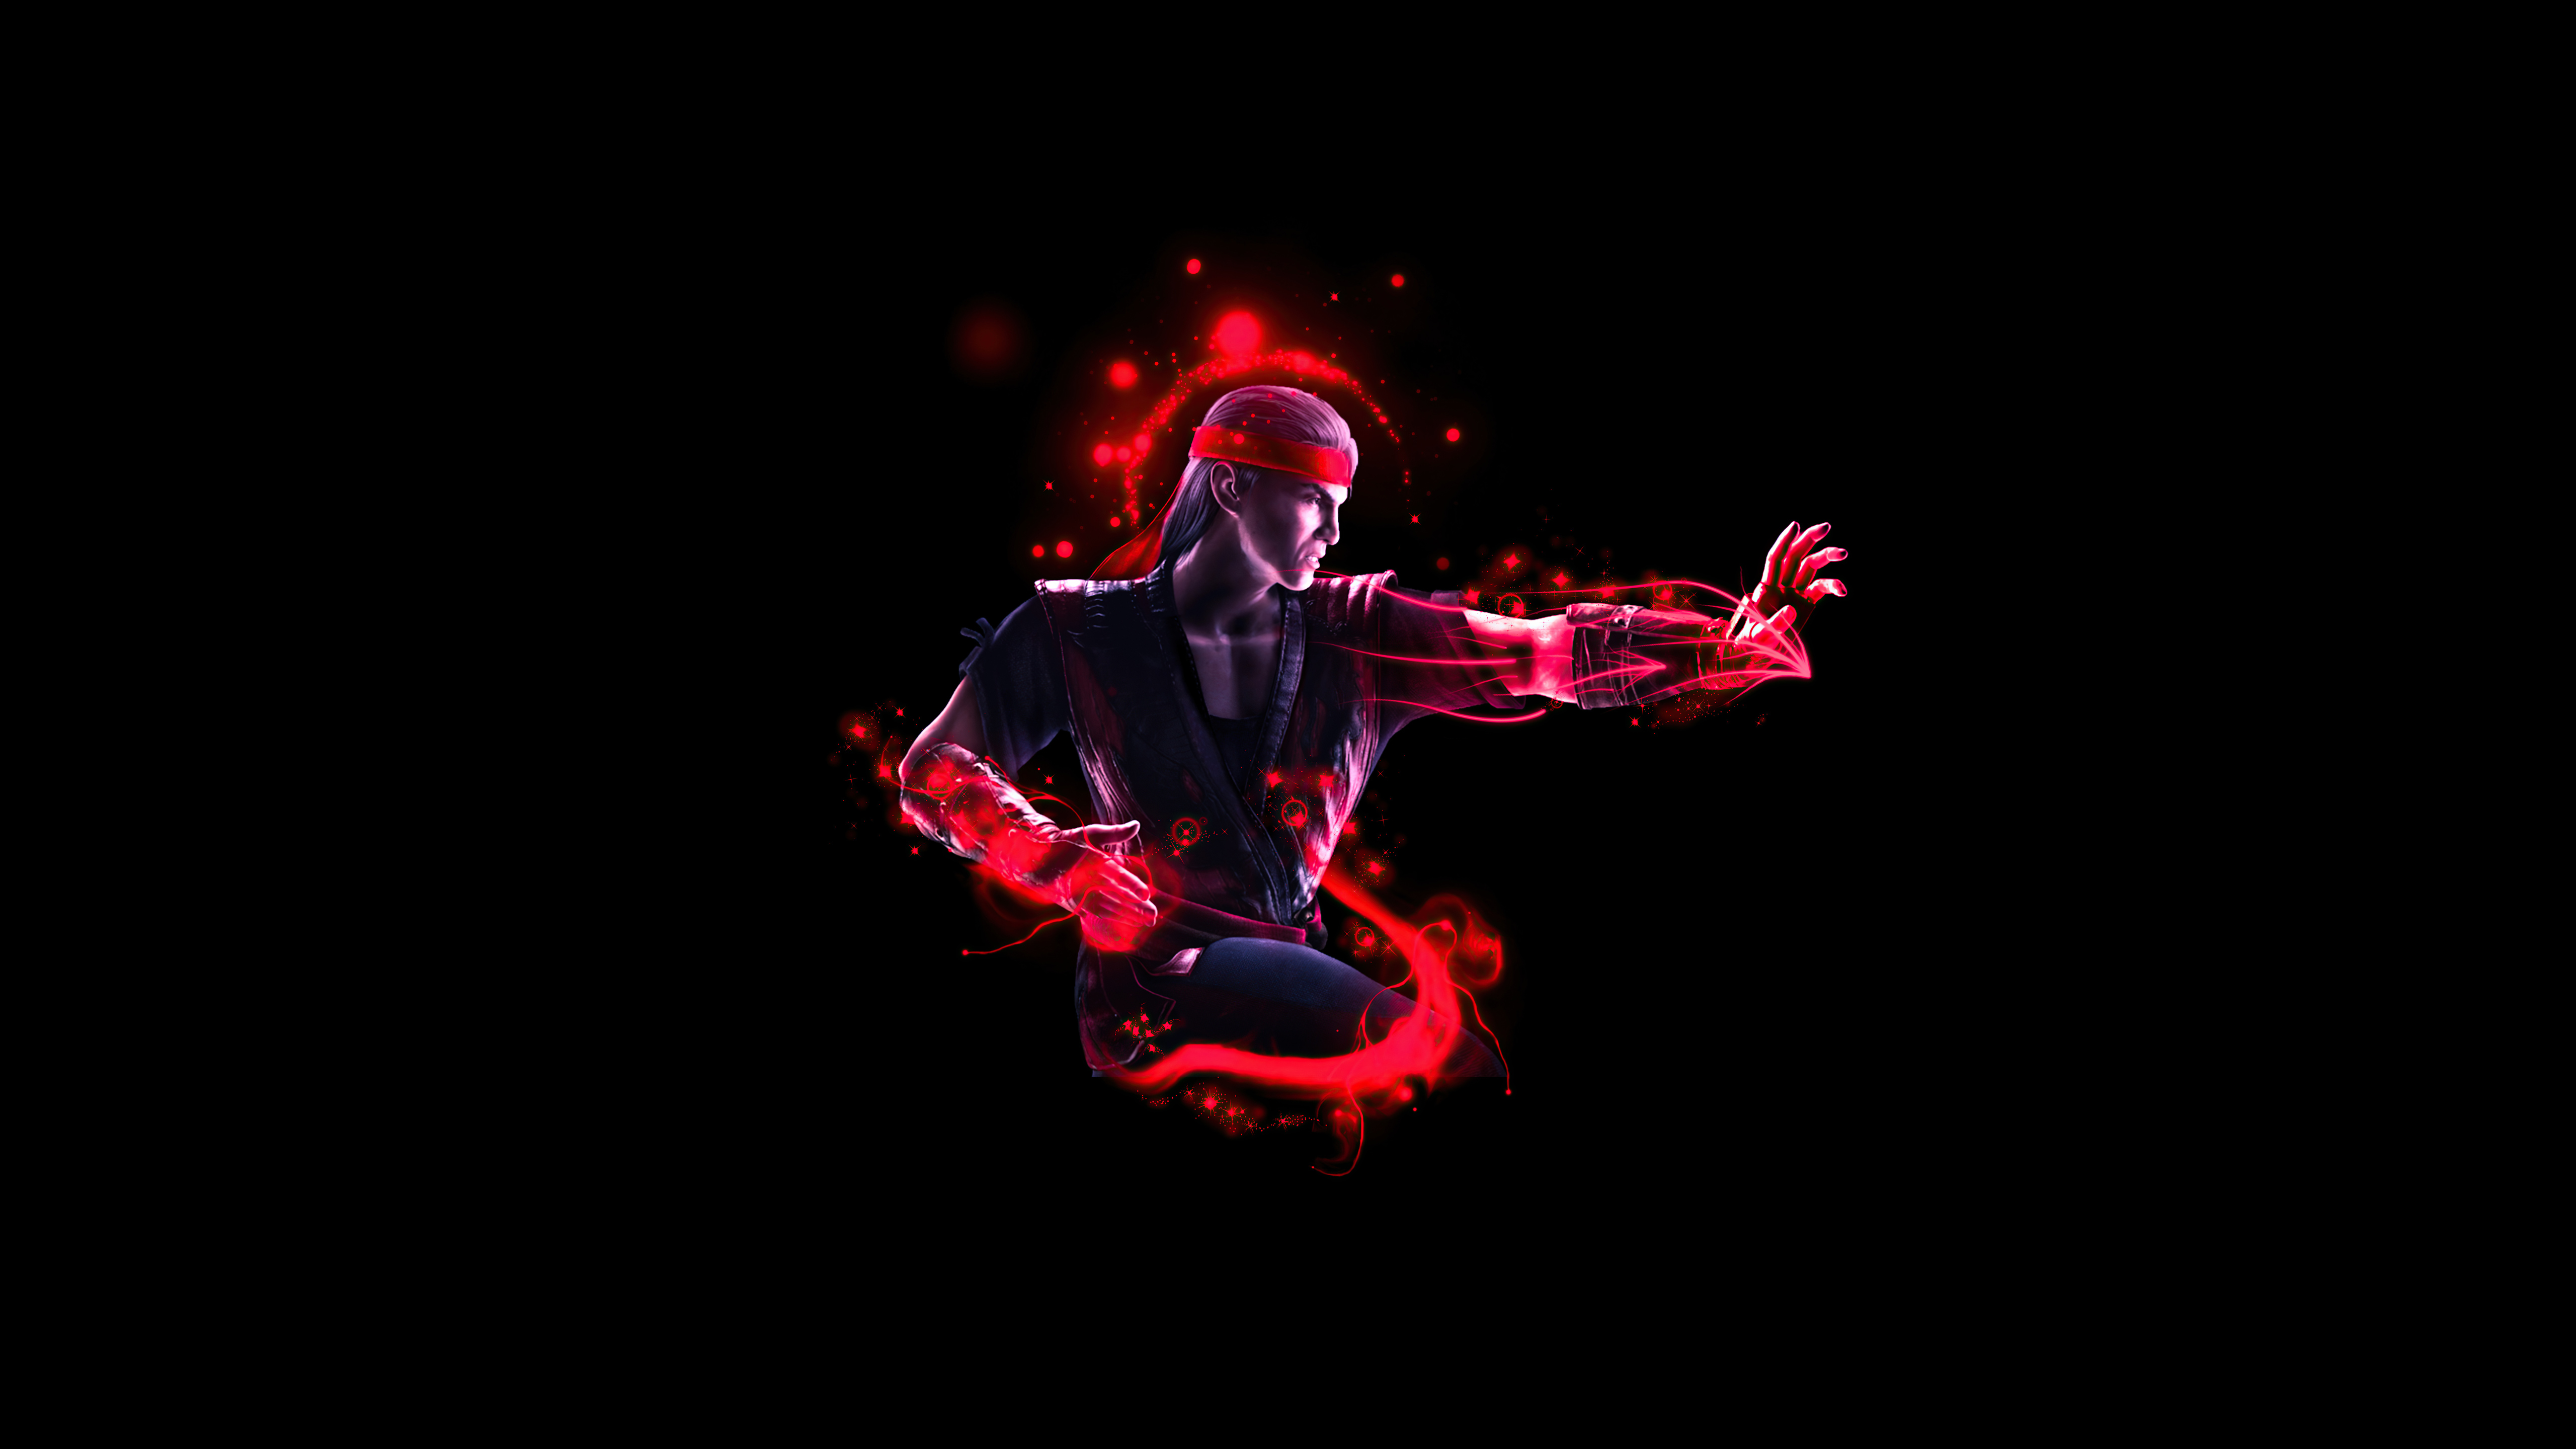 3840x21602019 Liu Kang Mortal Kombat Minimal Art 3840x21602019